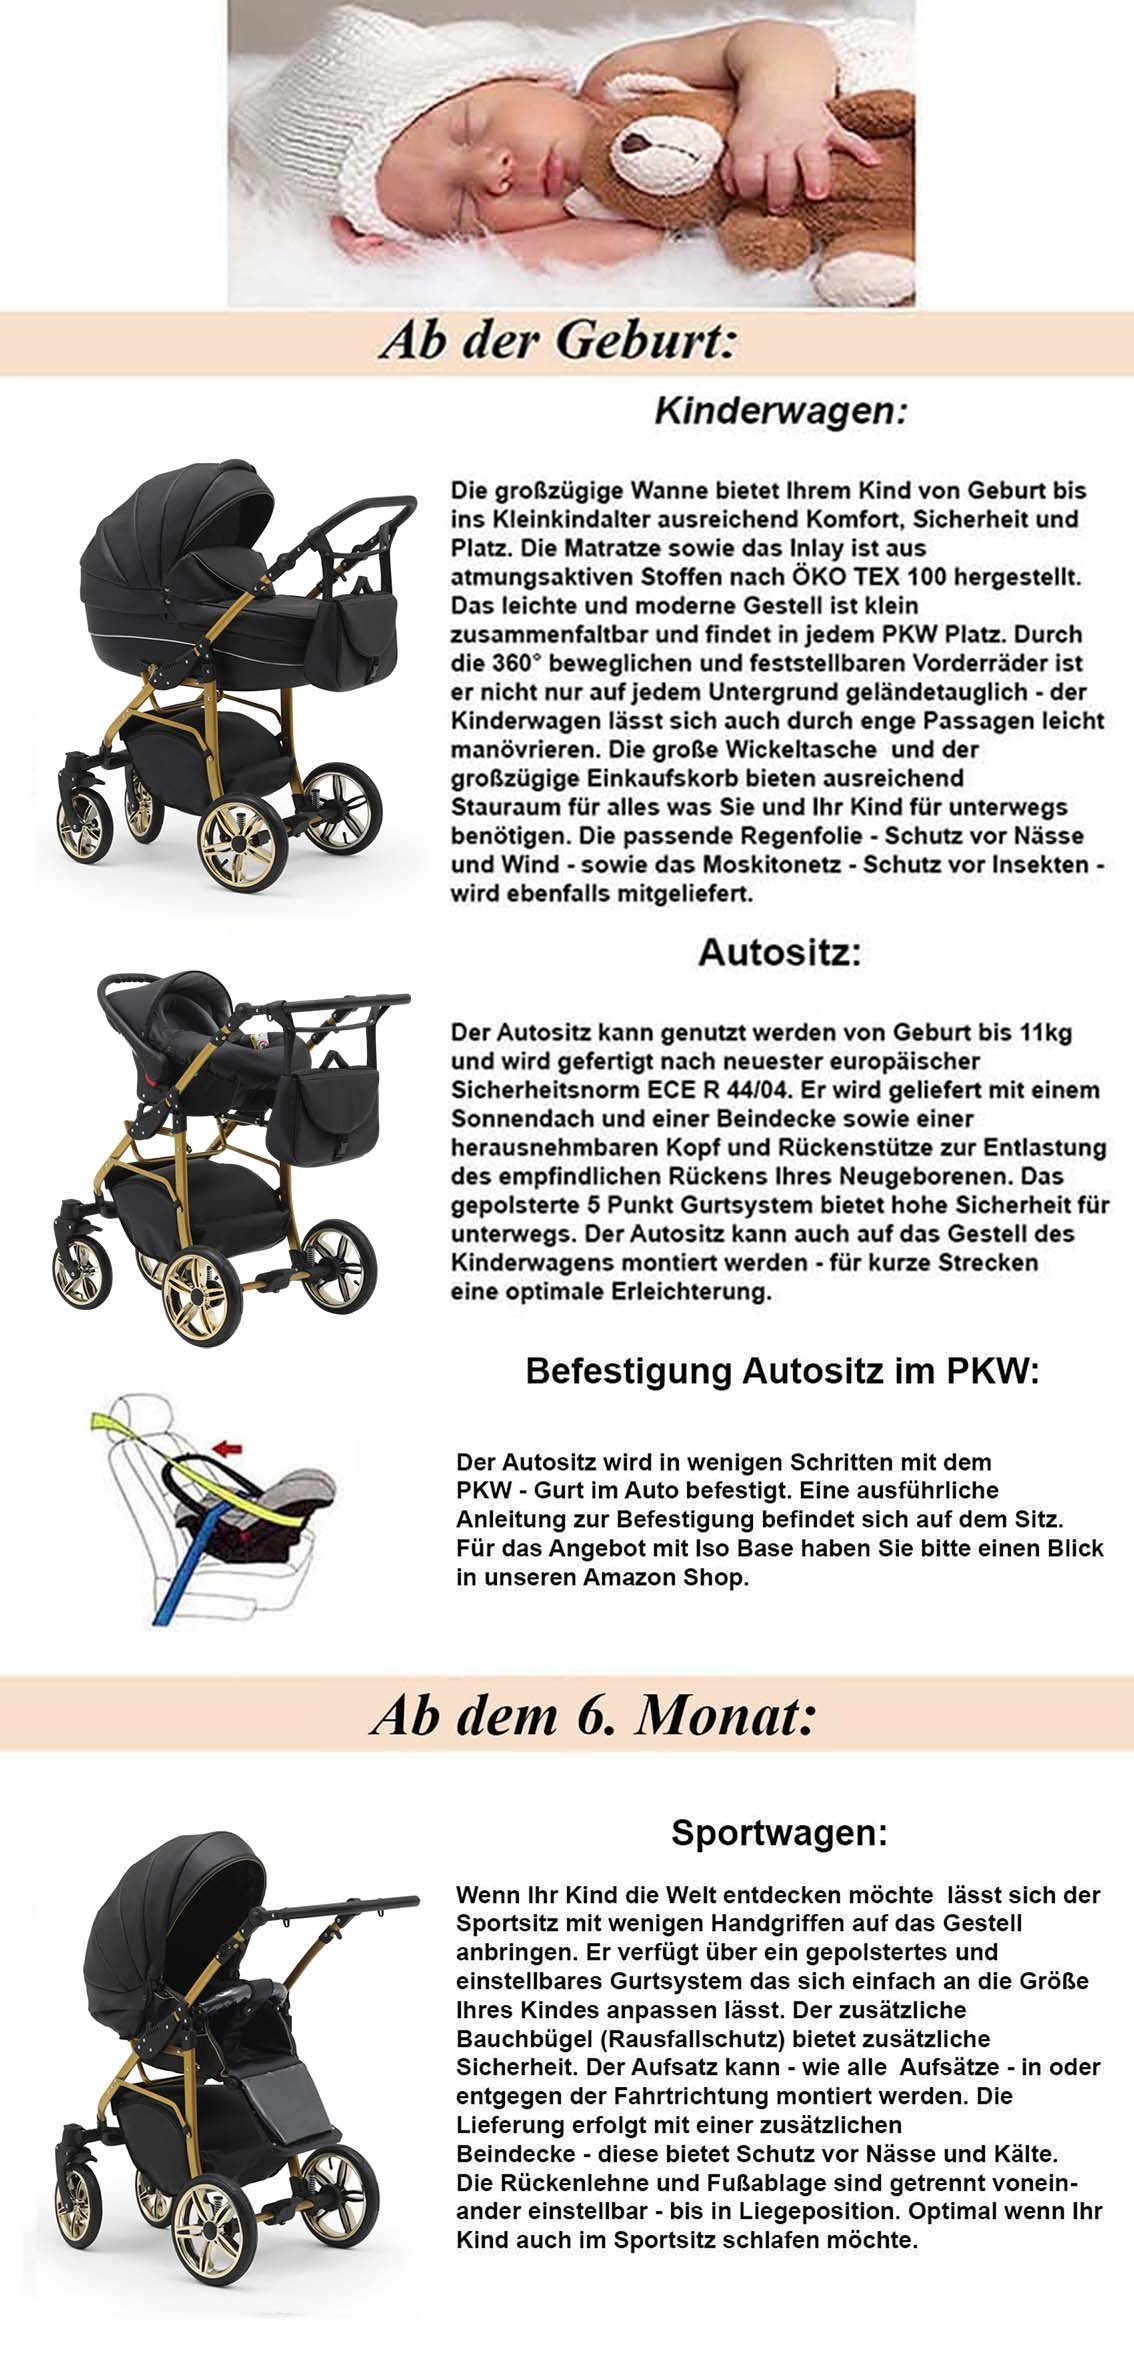 Farben Pink-Schwarz-Schwarz babies-on-wheels Cosmo 1 - 16 Gold 3 Kombi-Kinderwagen Kinderwagen-Set Teile - 46 in ECO in